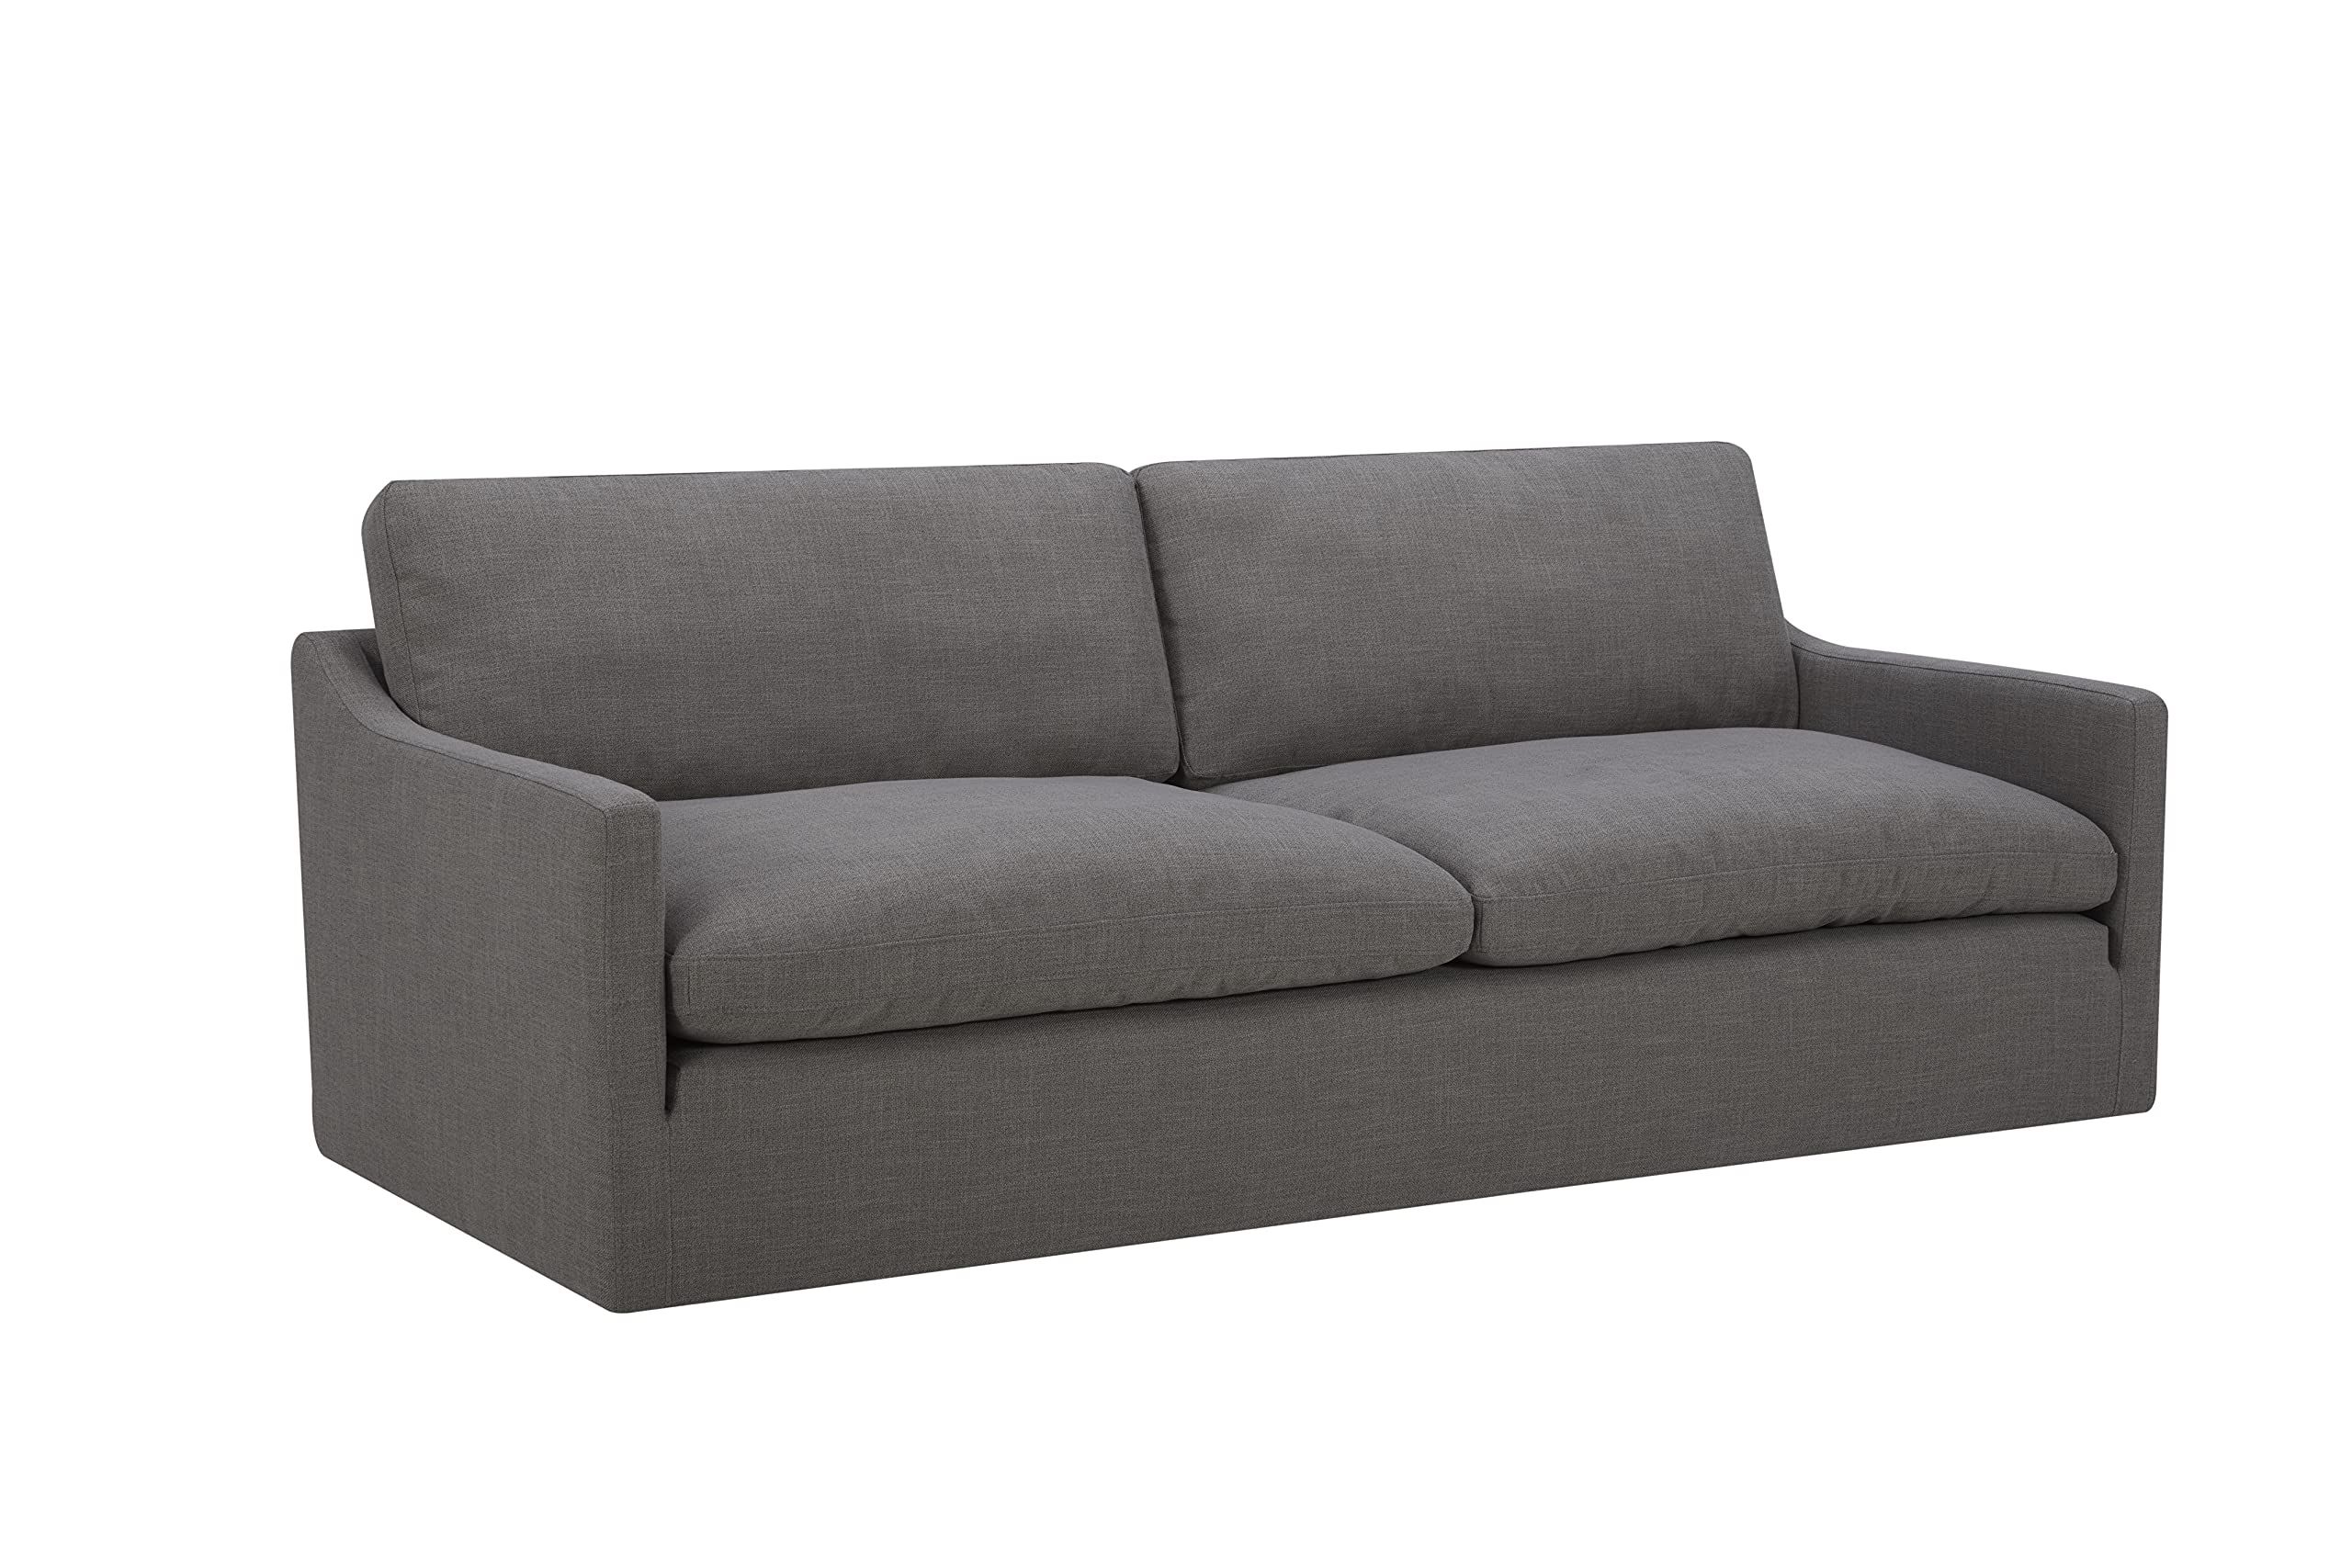 Amazon Brand – Stone & Beam Rustin Contemporary Deep-Seated Sofa Couch, 89"W, Grey | Amazon (US)